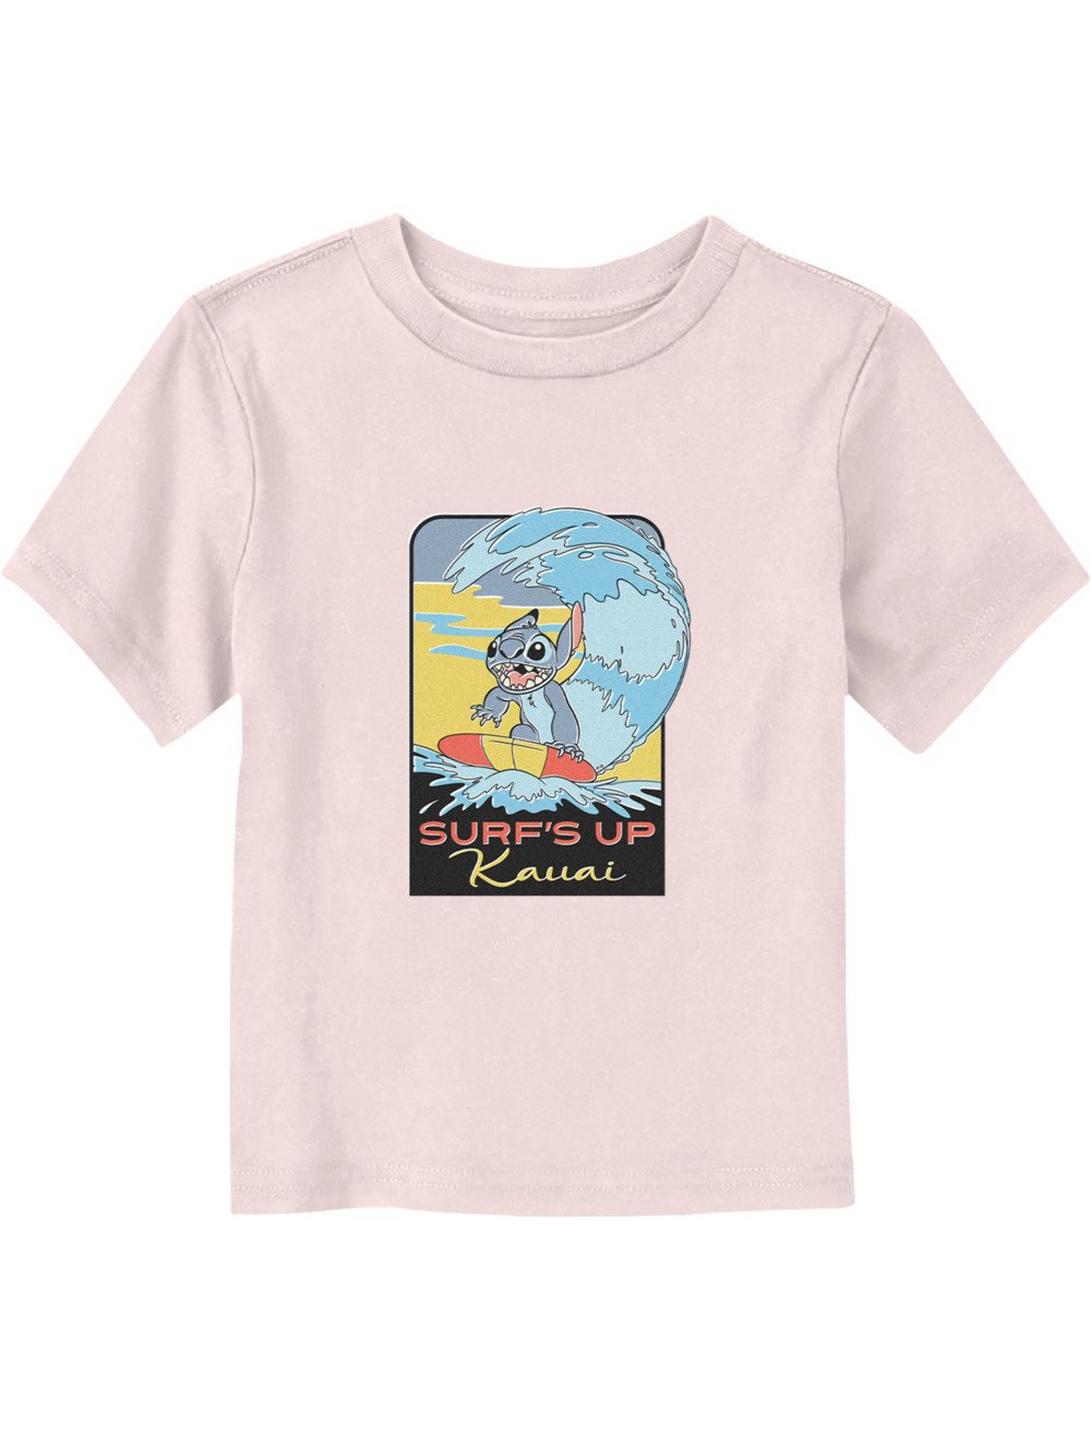 Disney Lilo & Stitch Surf's Up Kauai Toddler T-Shirt, LIGHT PINK, hi-res